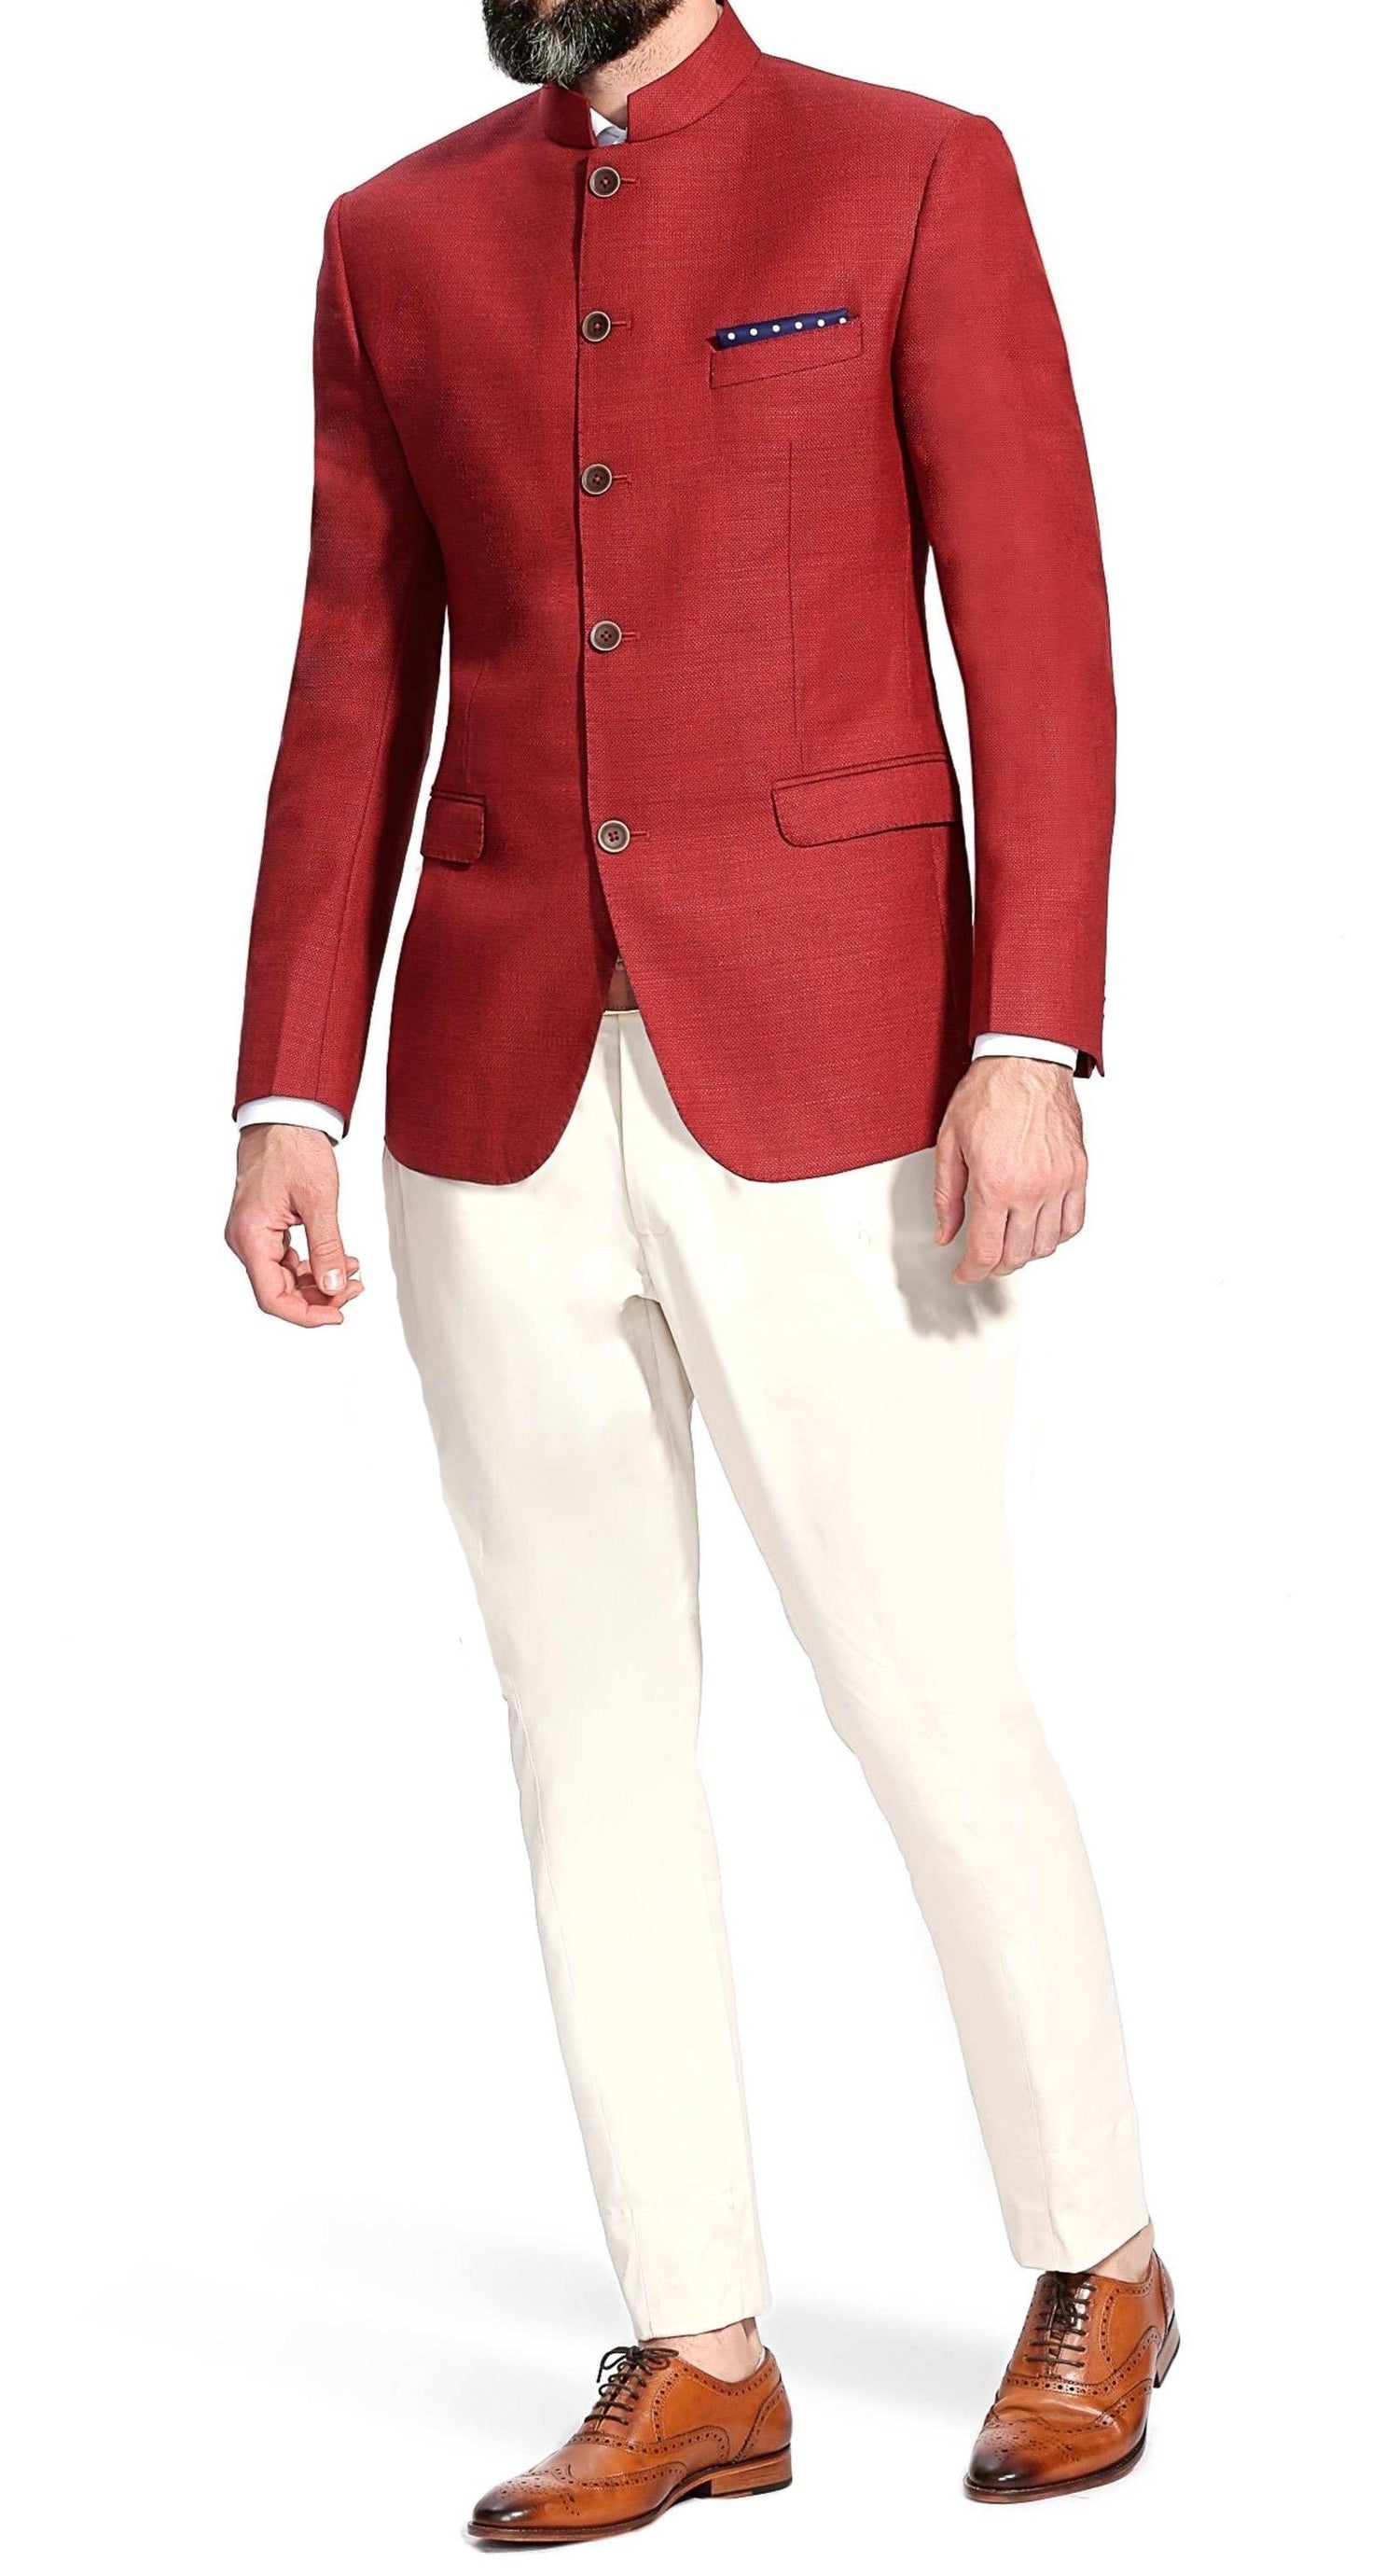 Bespoke Classic White Jodhpuri Bandhgala Suit for Men Best Buy for Formal  Events Parties Weddings Elite Elegant Dignified Appearance - Etsy